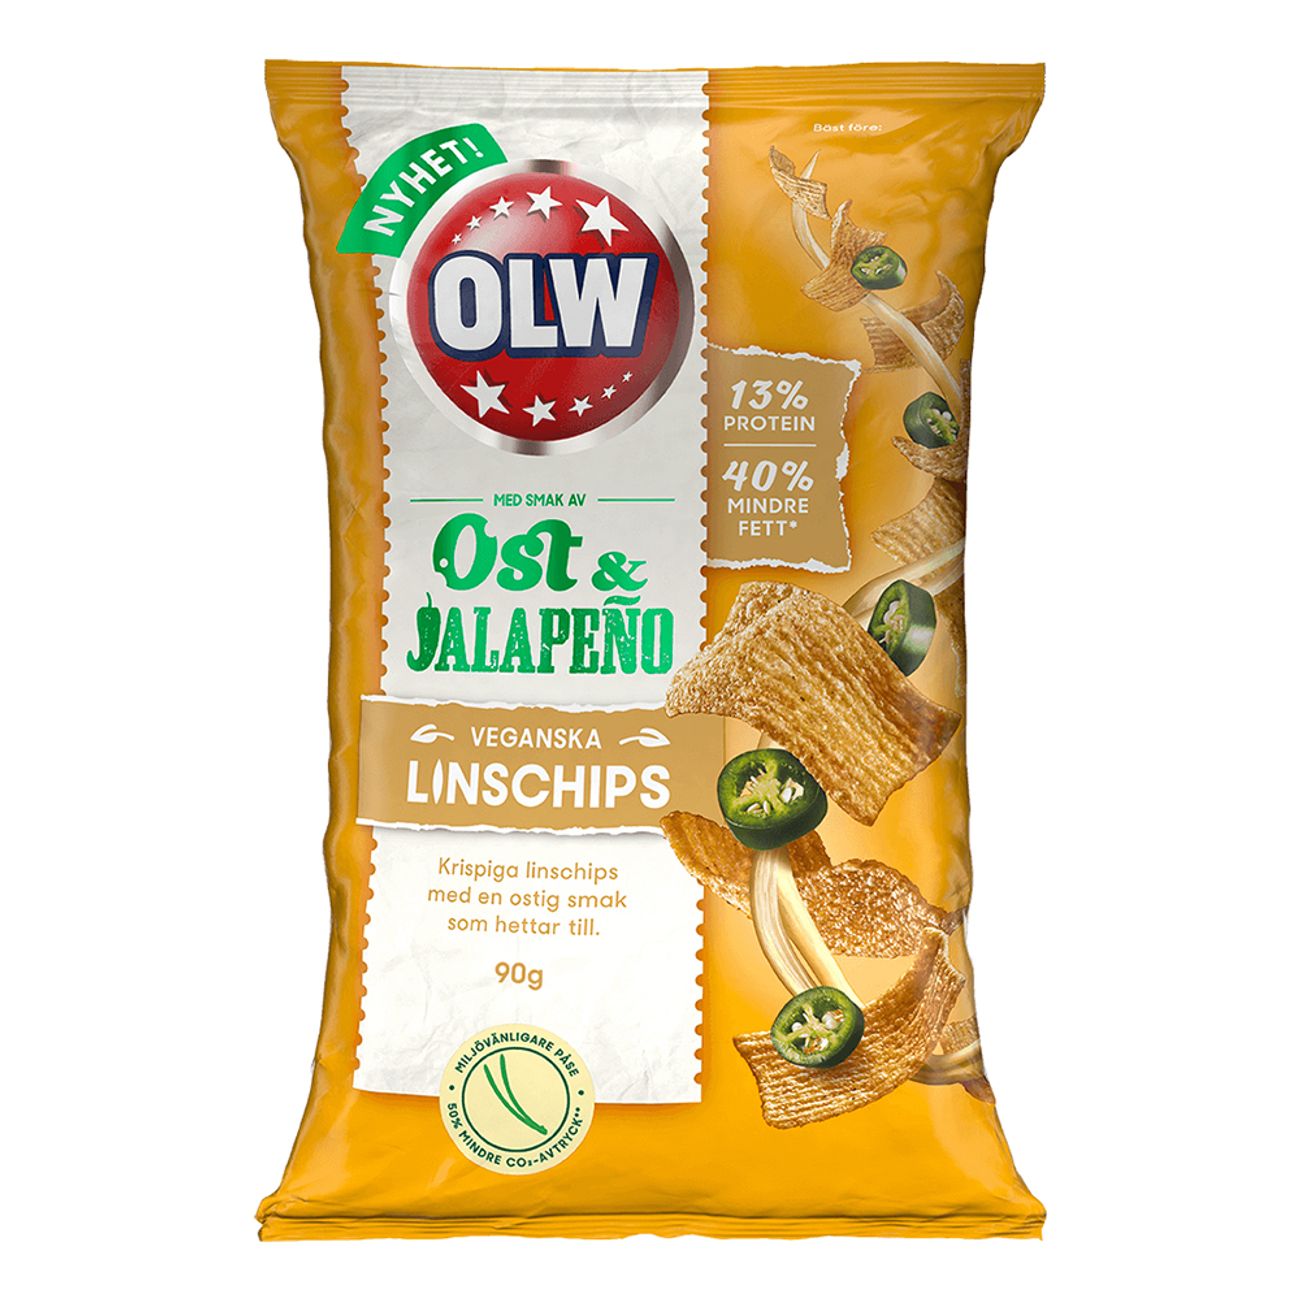 olw-linschips-ost-jalapeno-71621-4